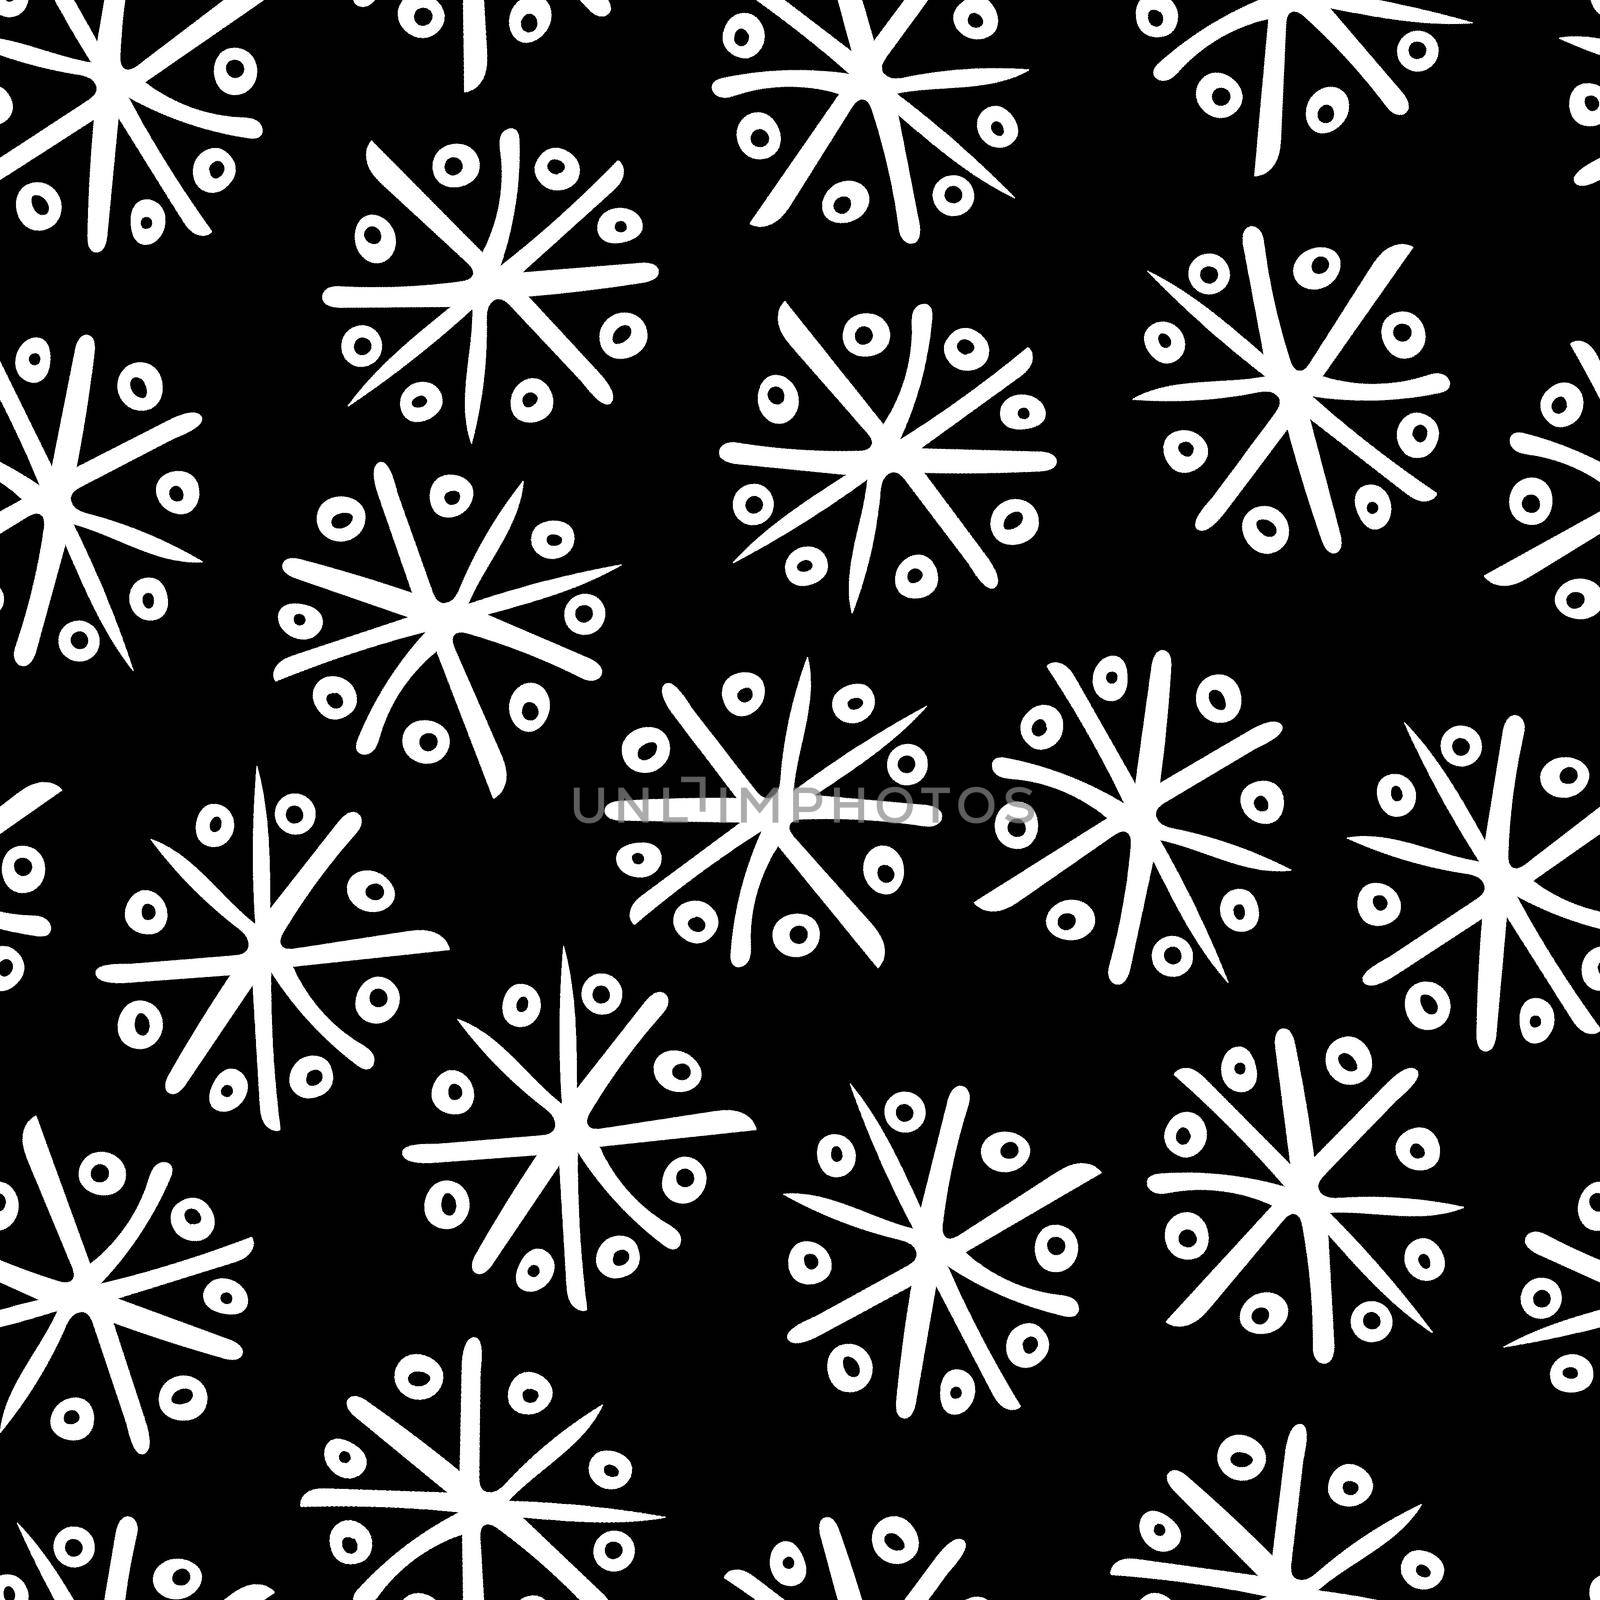 Seamless Pattern with Snowflakes on Black Background. by Rina_Dozornaya